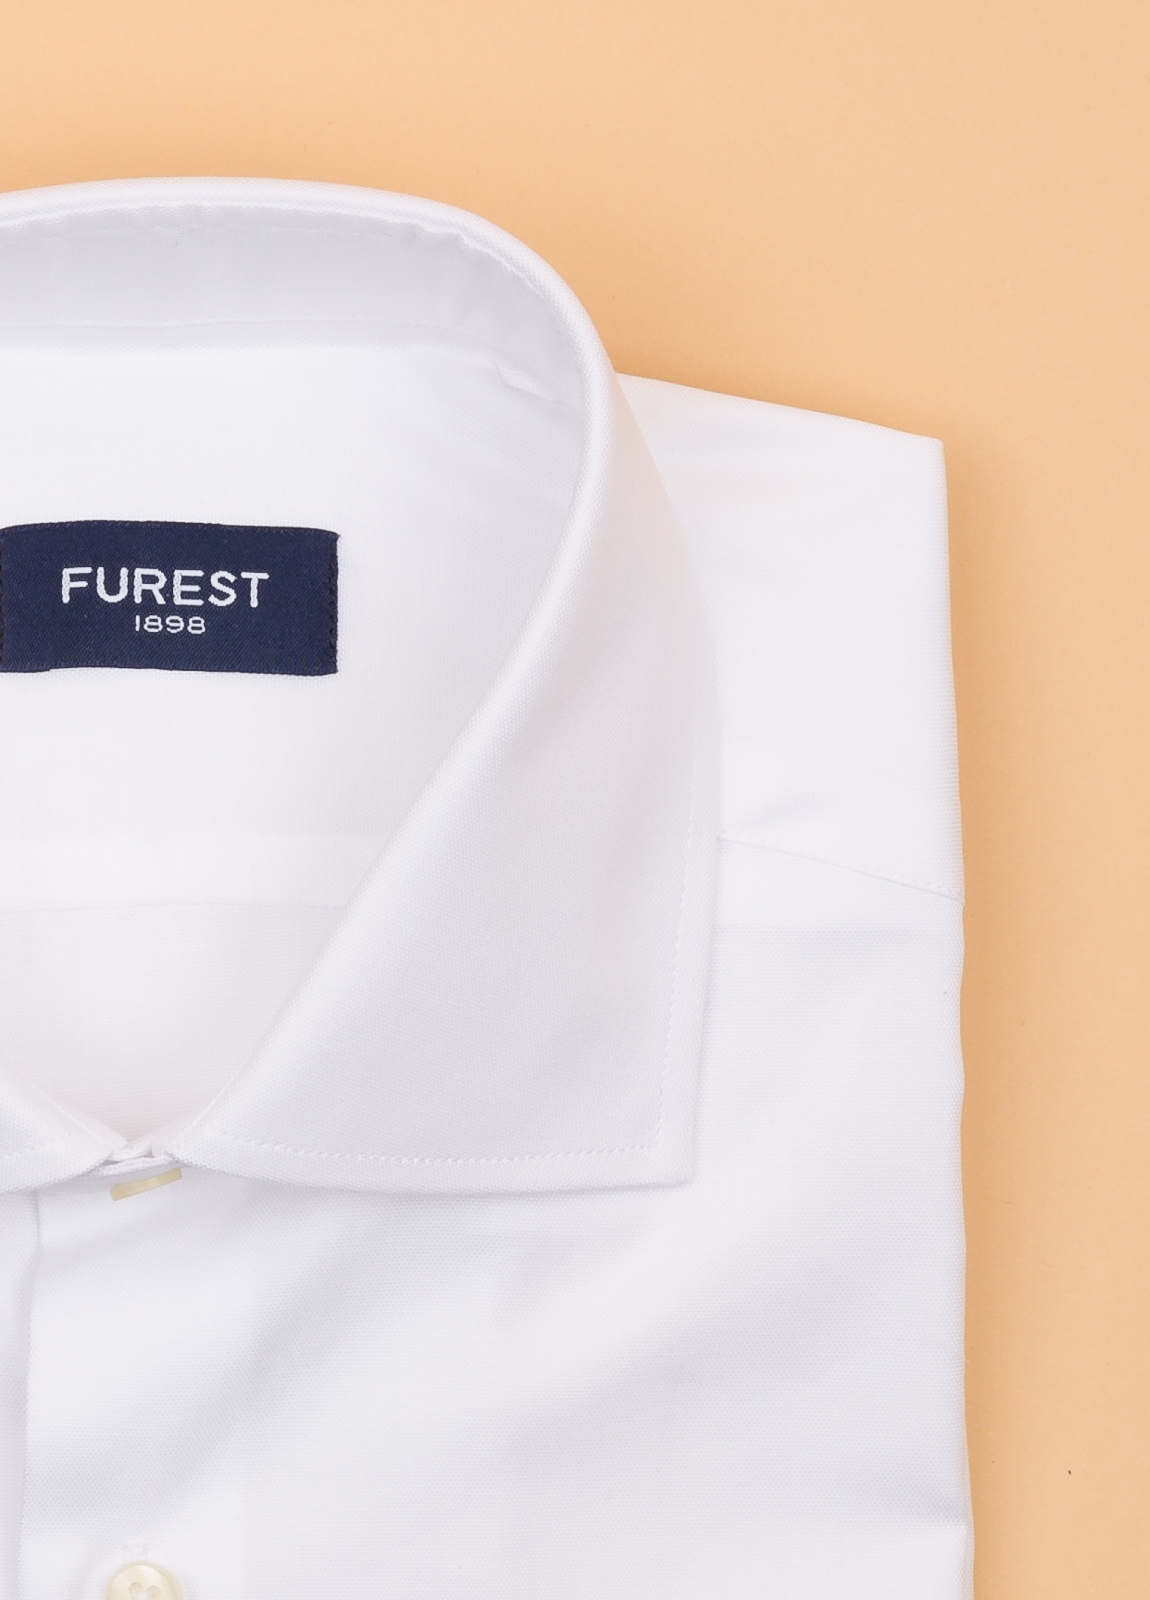 Camisa vestir FUREST COLECCION lisa pin point blanca - Ítem1